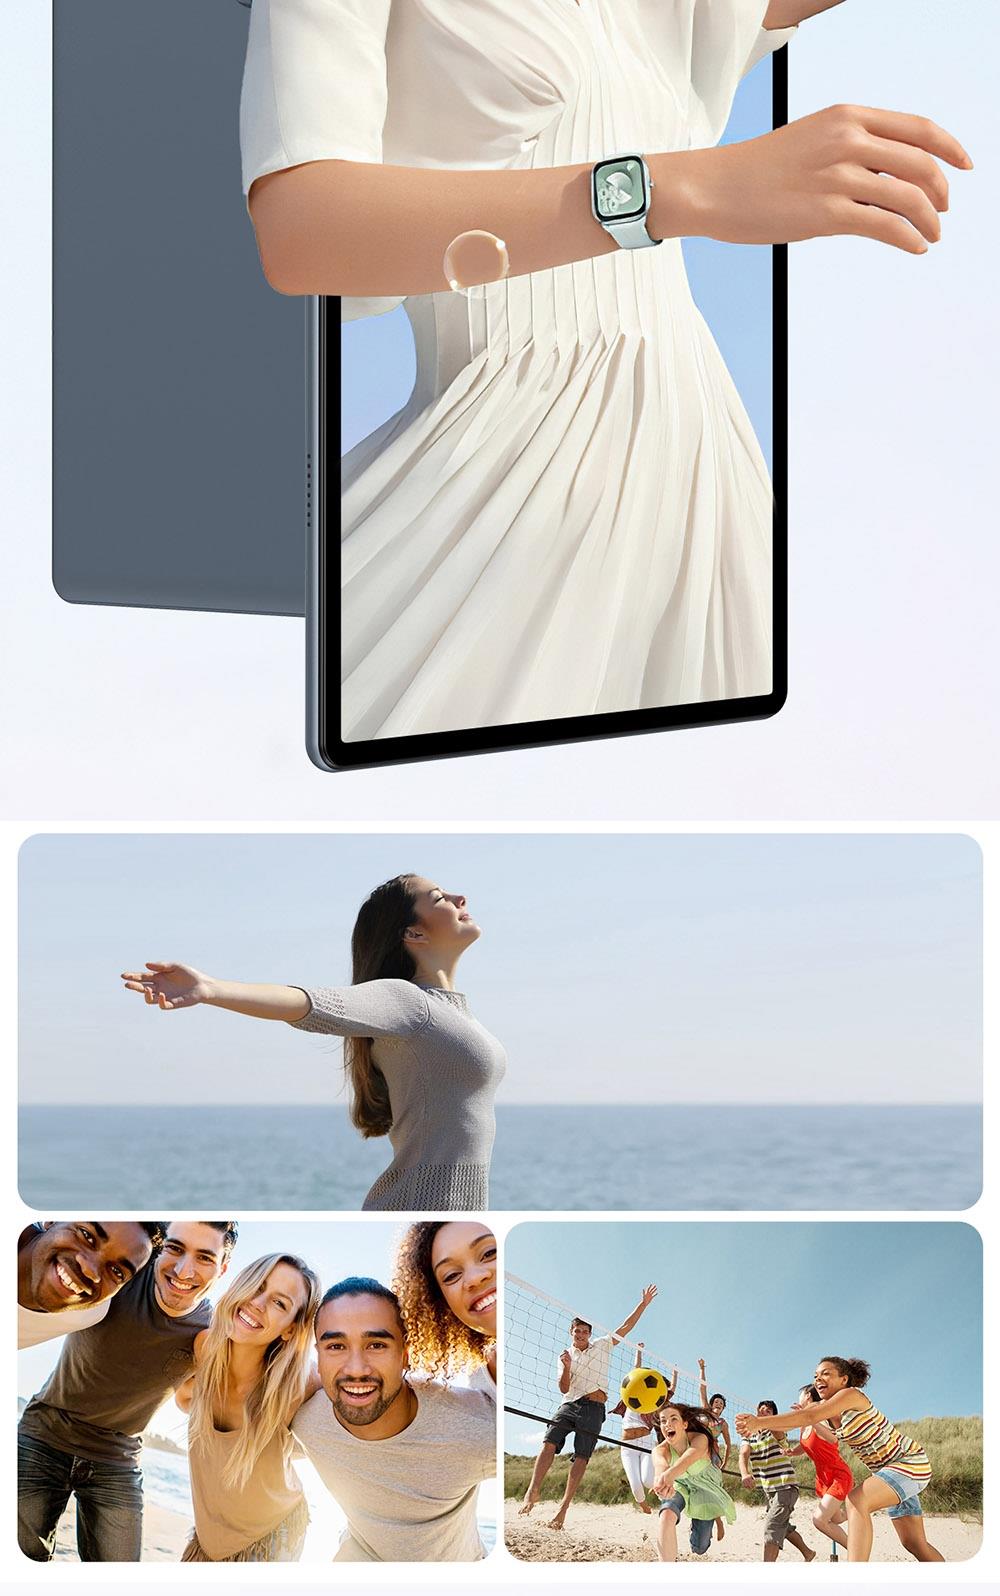 N-one Npad Y1 10,1 Zoll Tablet, 1280 x 800 HD IPS-Touchscreen, Rockchip 3562, Android 13, 4GB (+4GB), 64GB